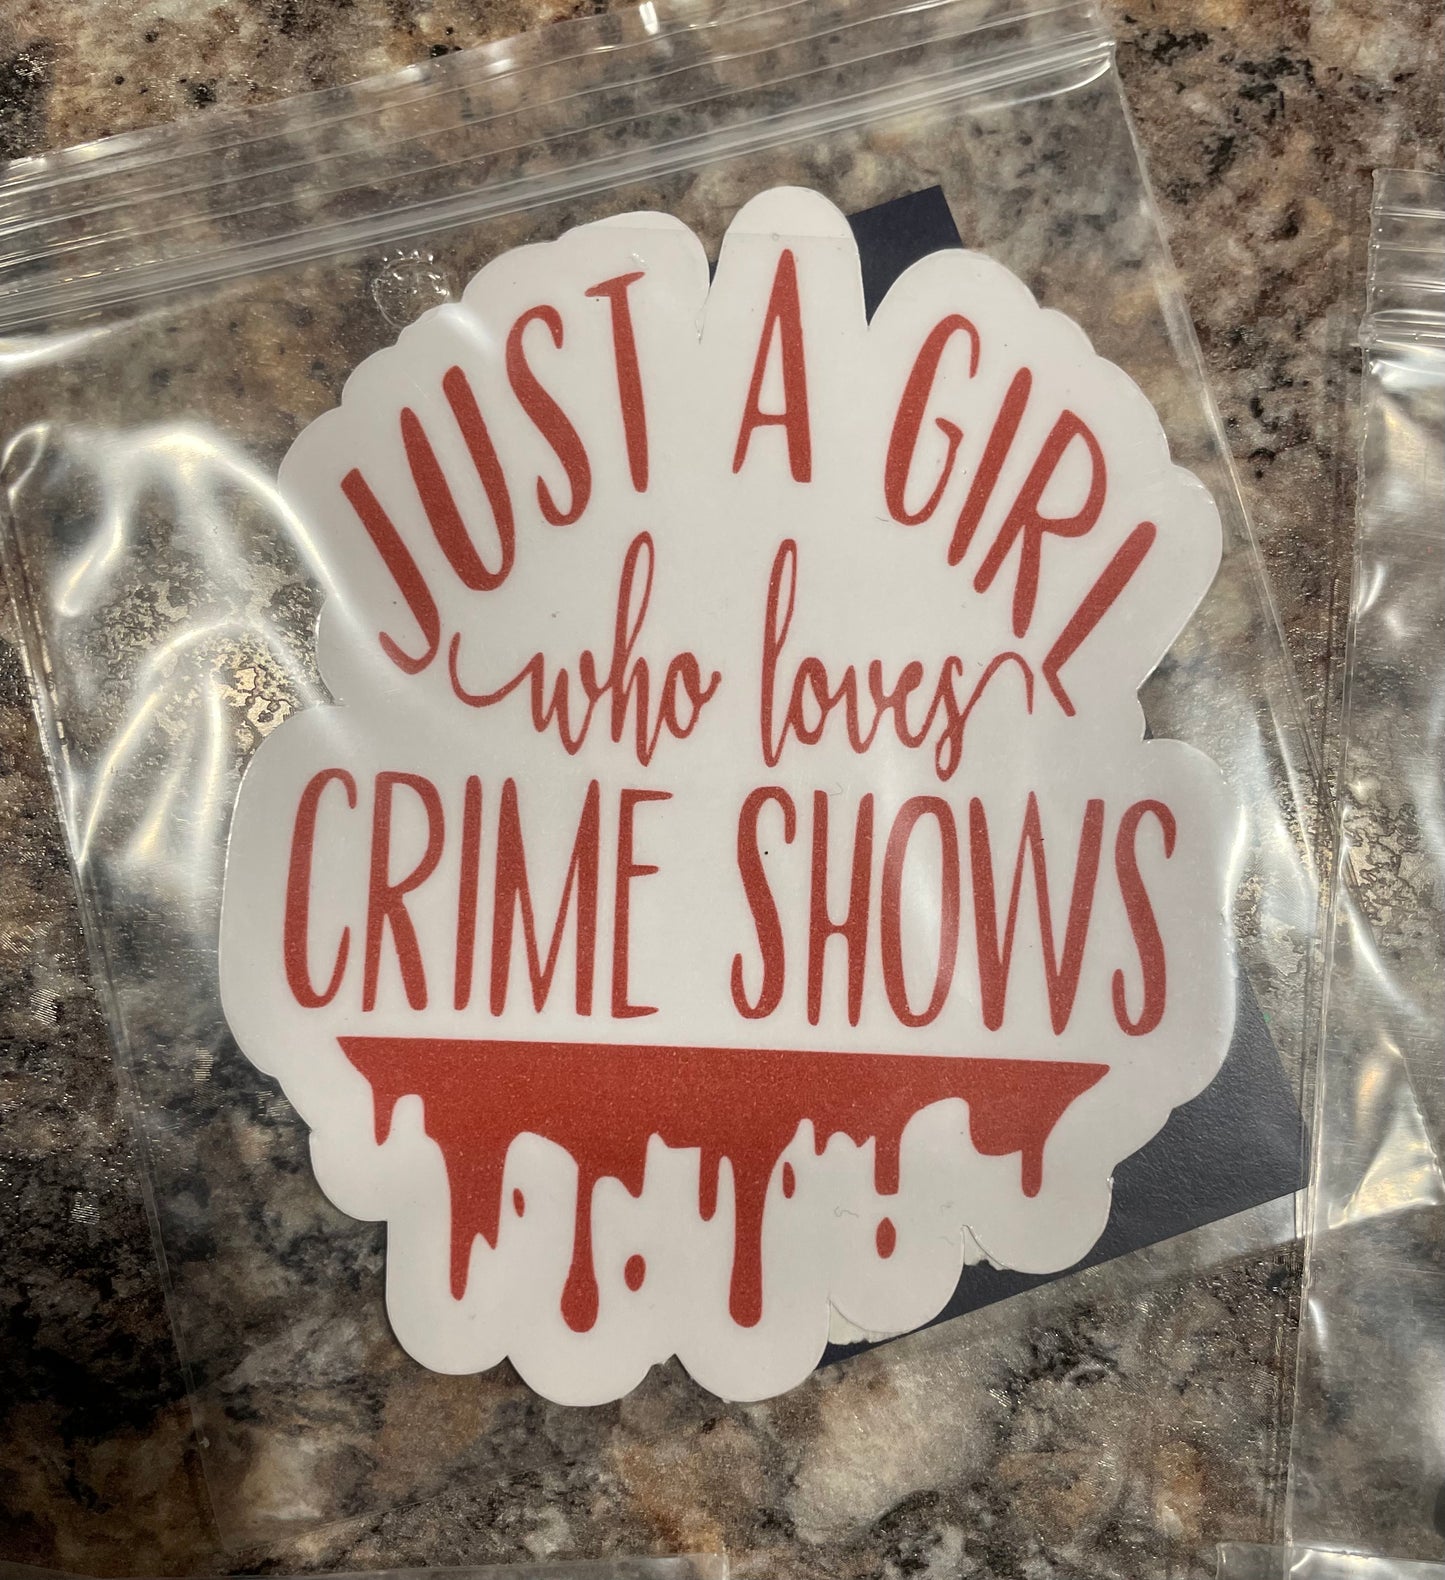 Crime shows